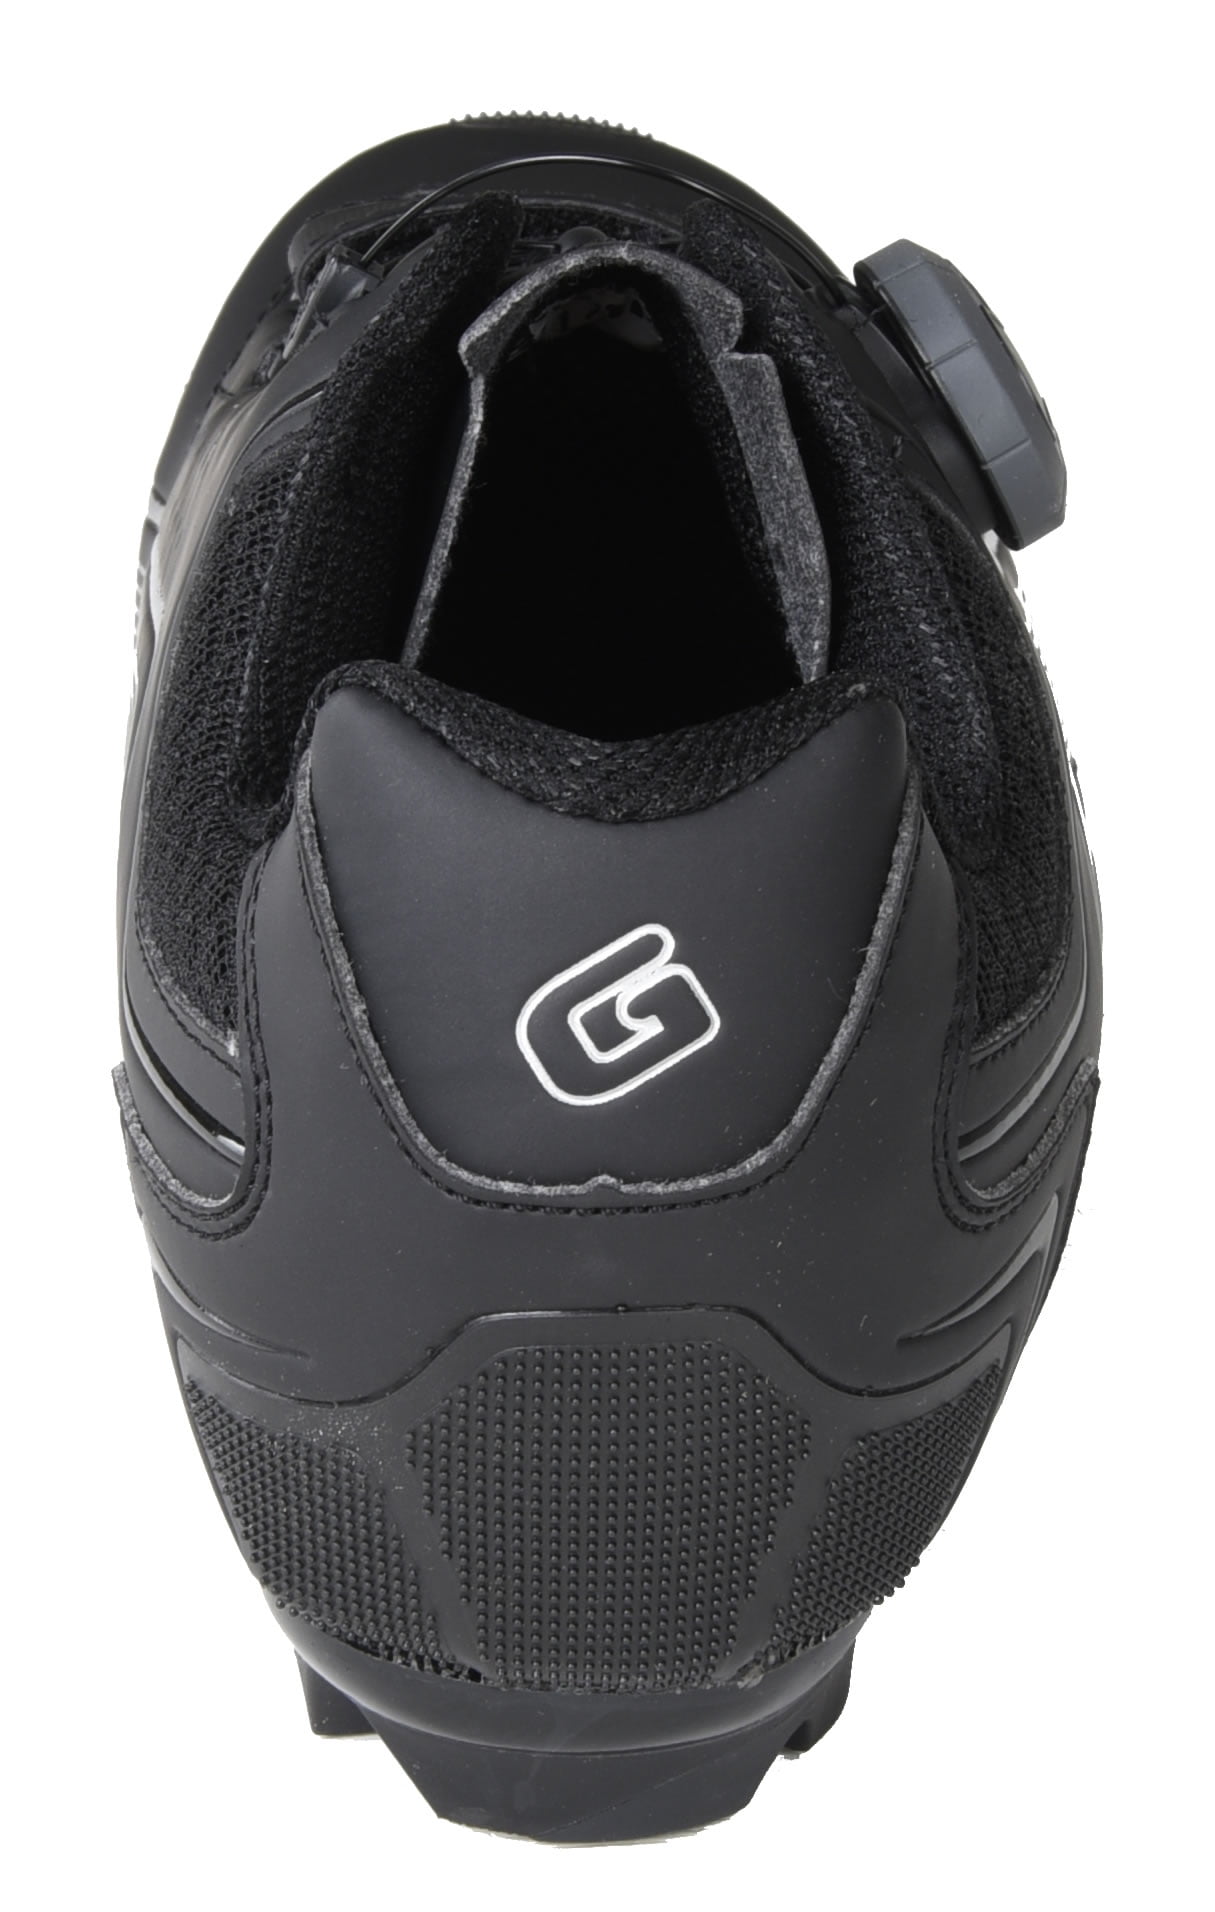 SPD Cleat compatible Mountain Bike Shoe Gavin Pro MTB Shoe Quick Lace 